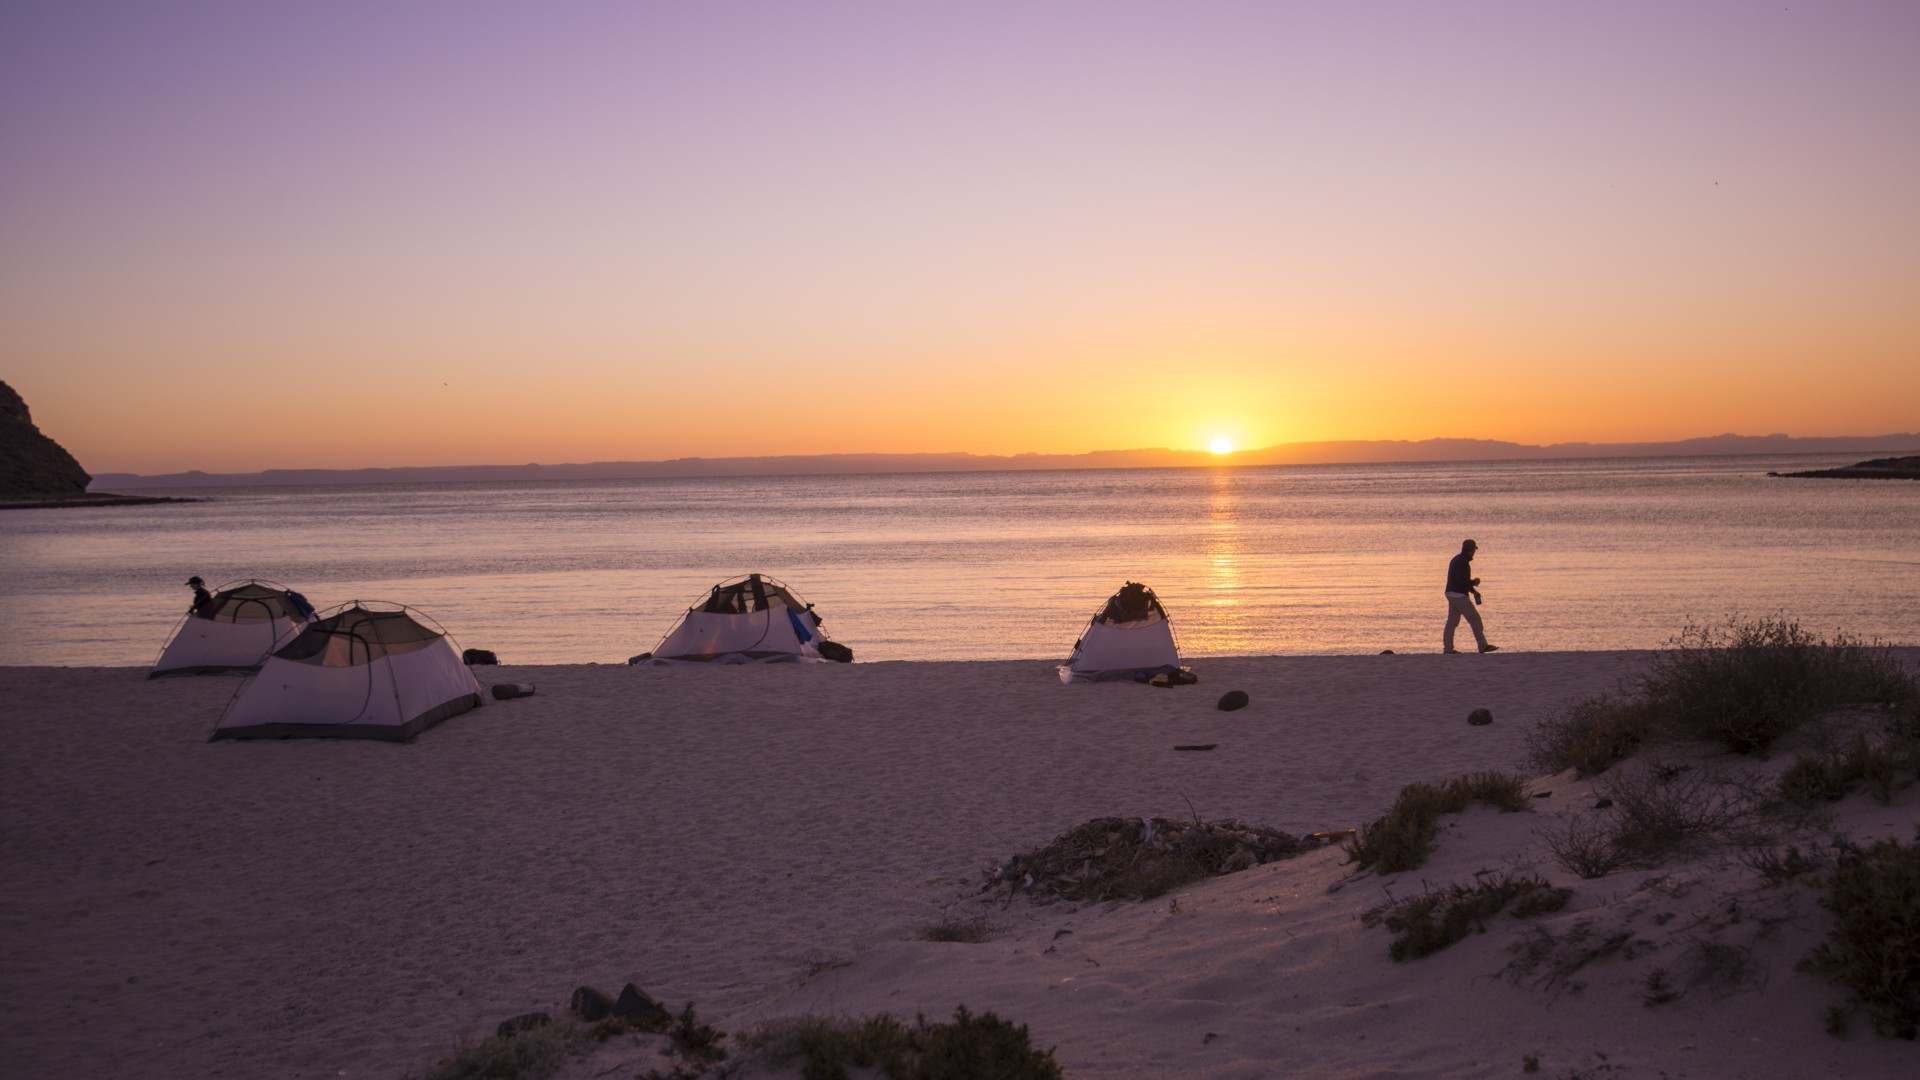 Island beach camping by kayak set up at sunset in Baja California Sur